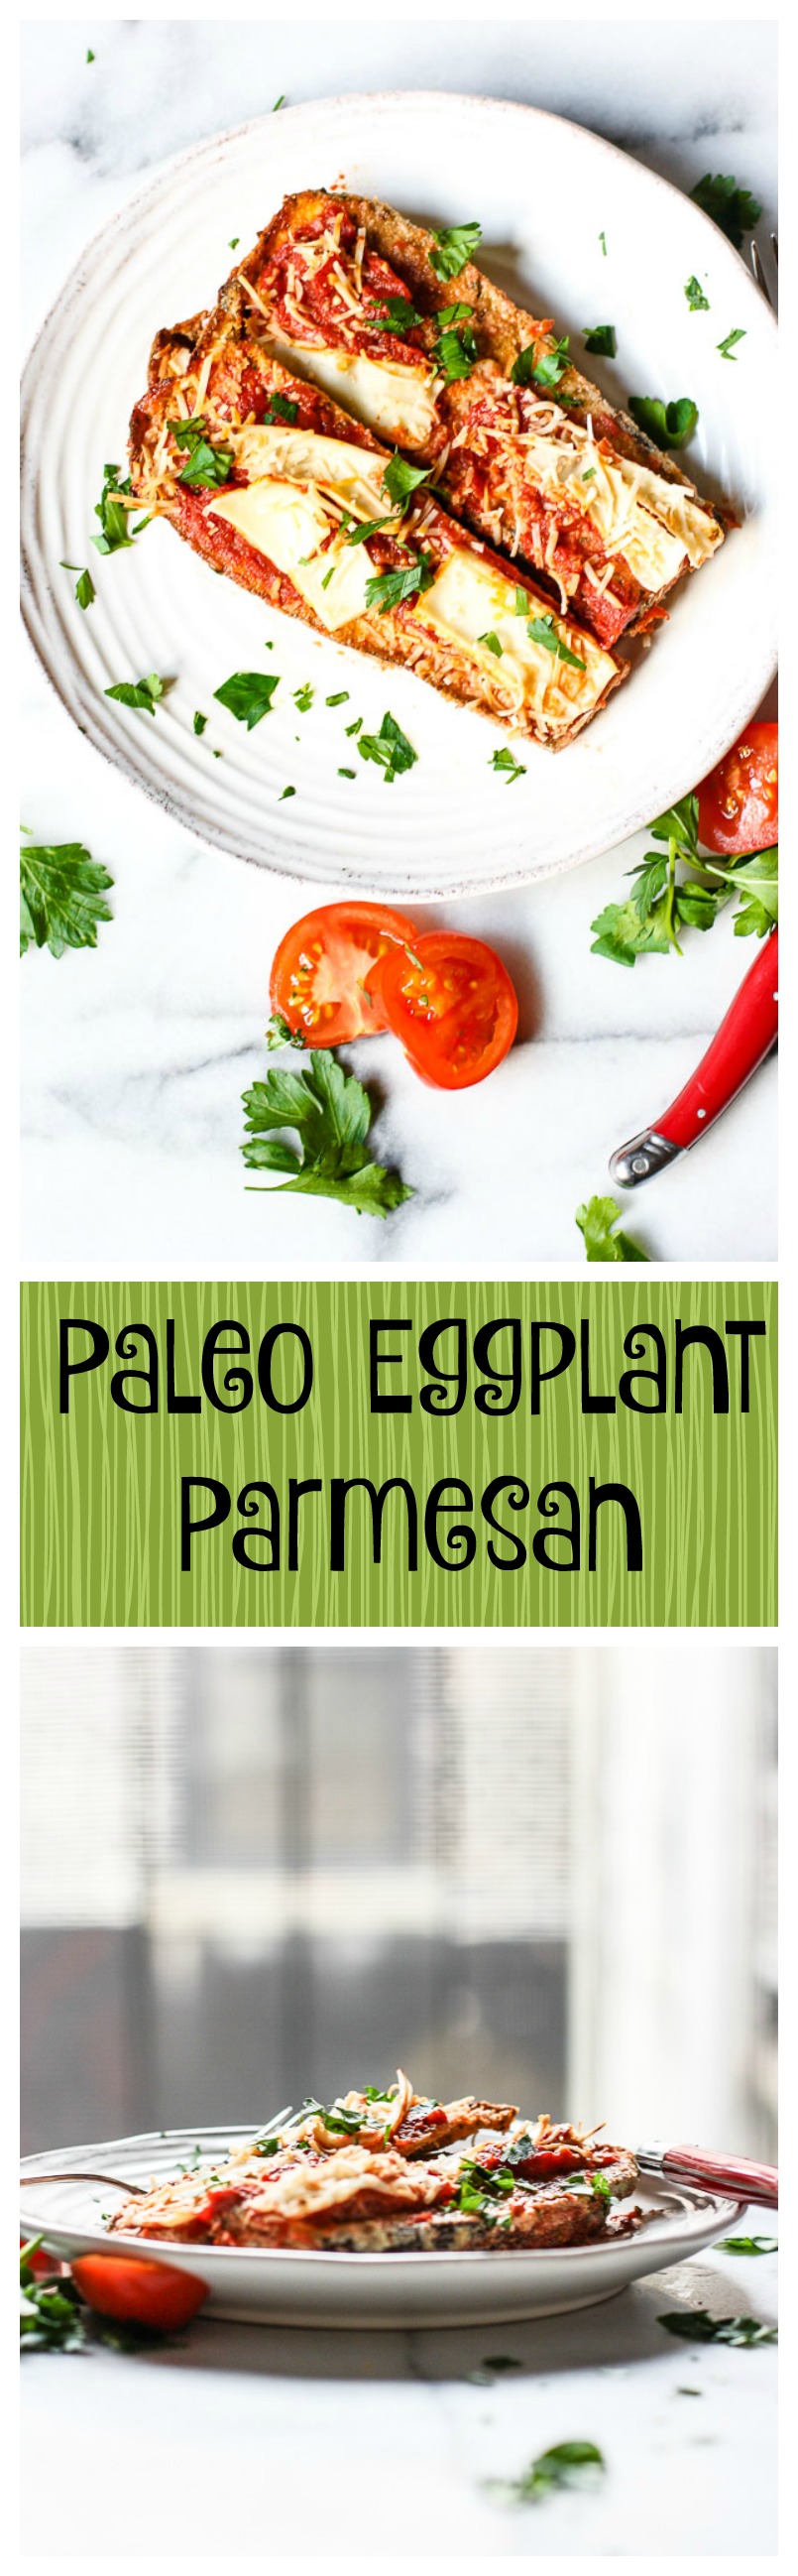 paleo eggplant parmesan